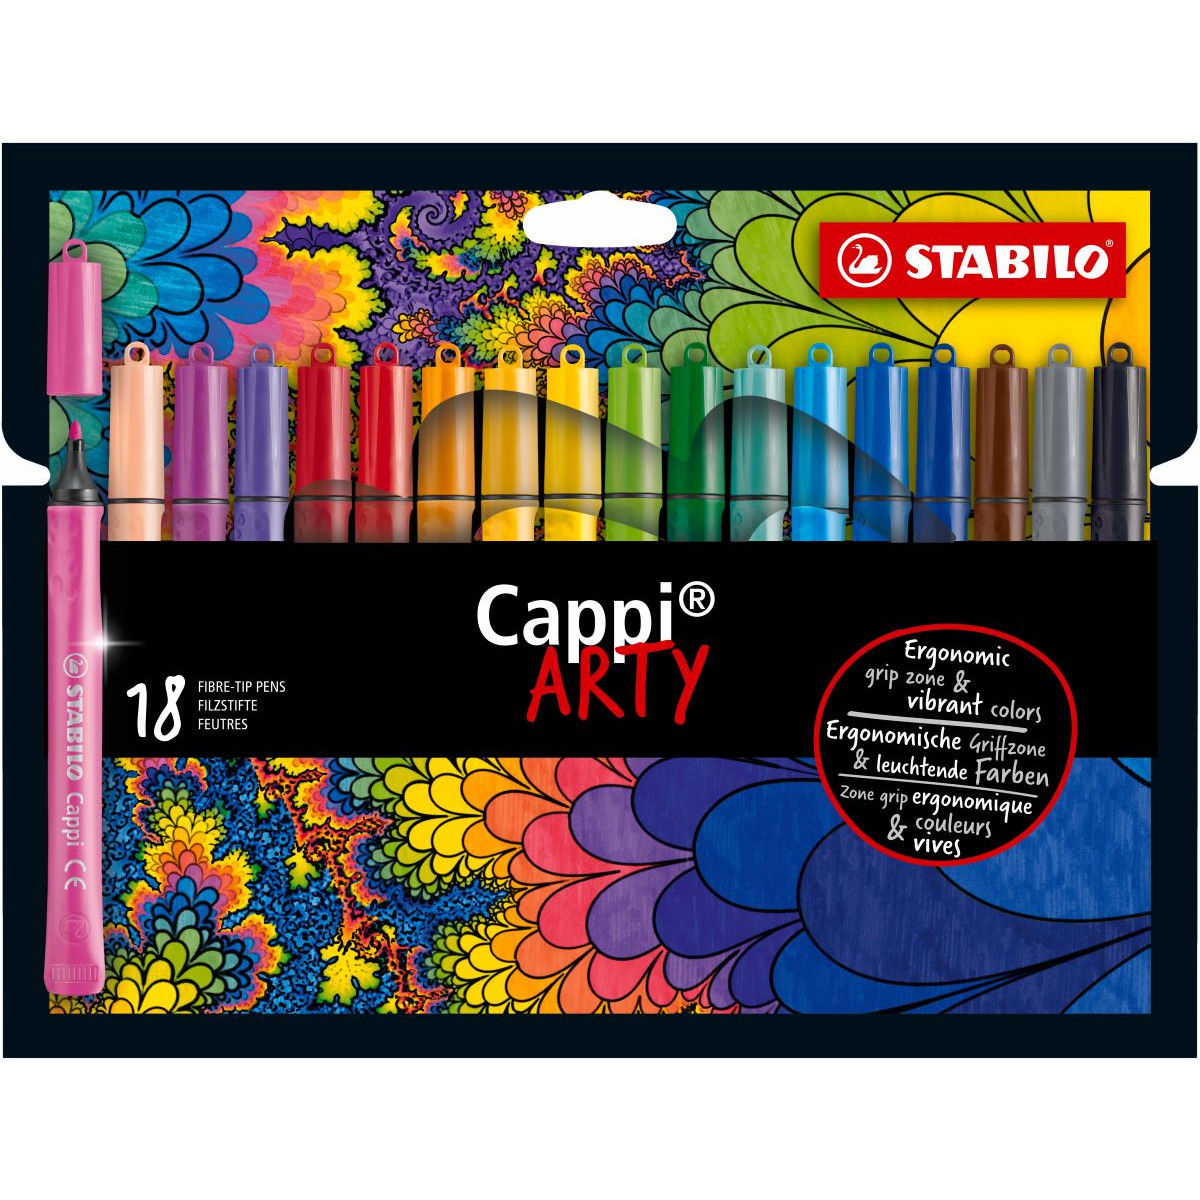 felt-tip pen STABILO power max - pack of 12 colors